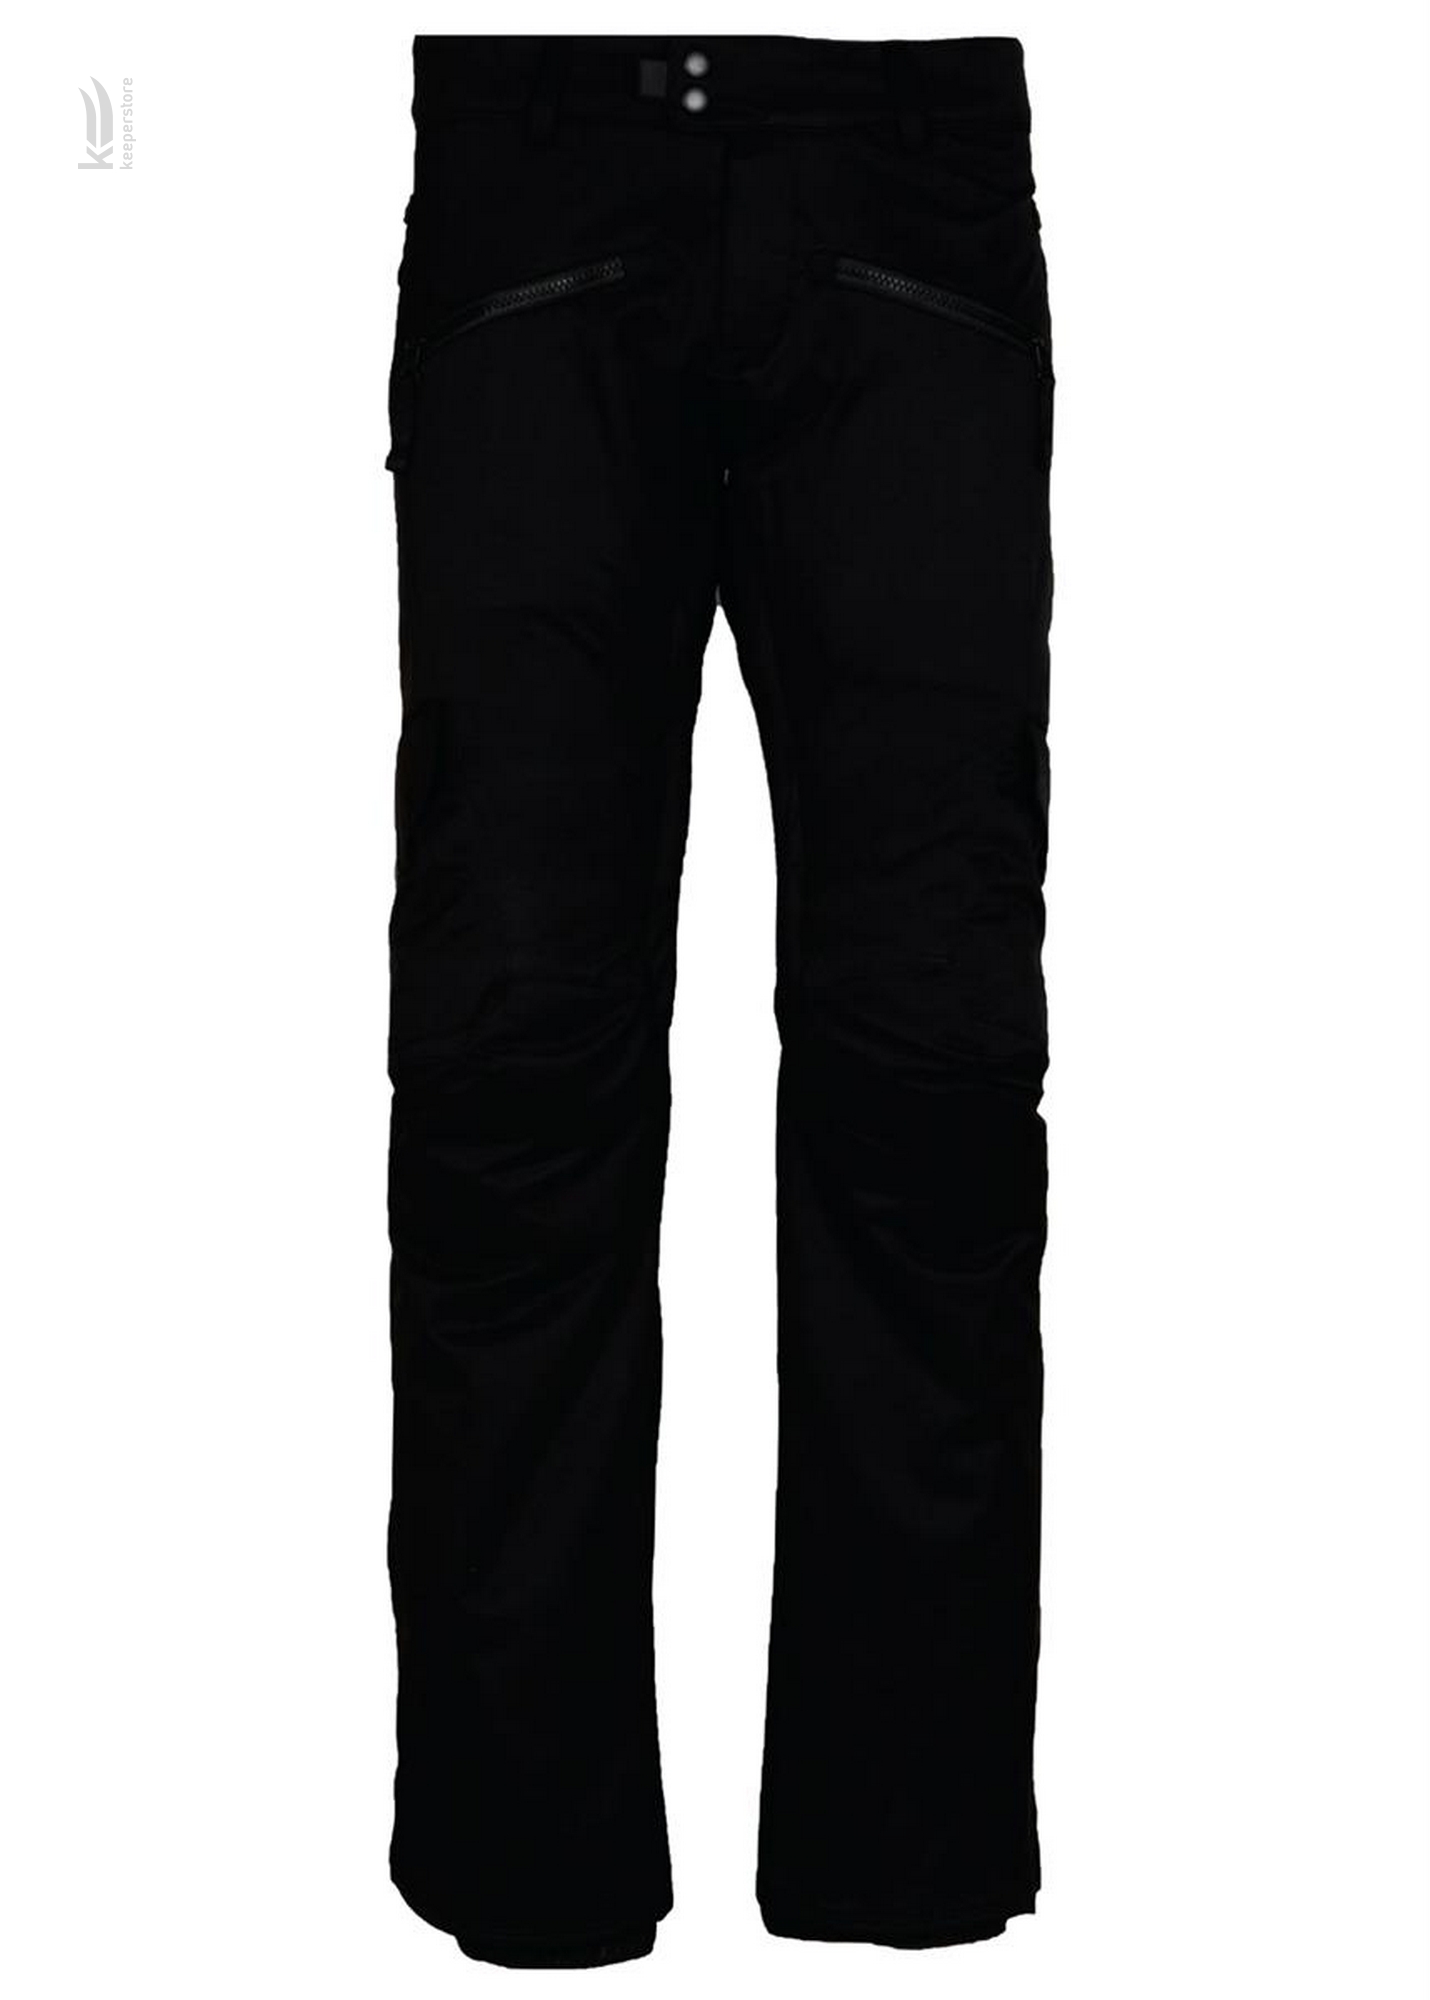 Лыжные штаны 686 Authentic Mistress Insulated Pant Black Jade (S)